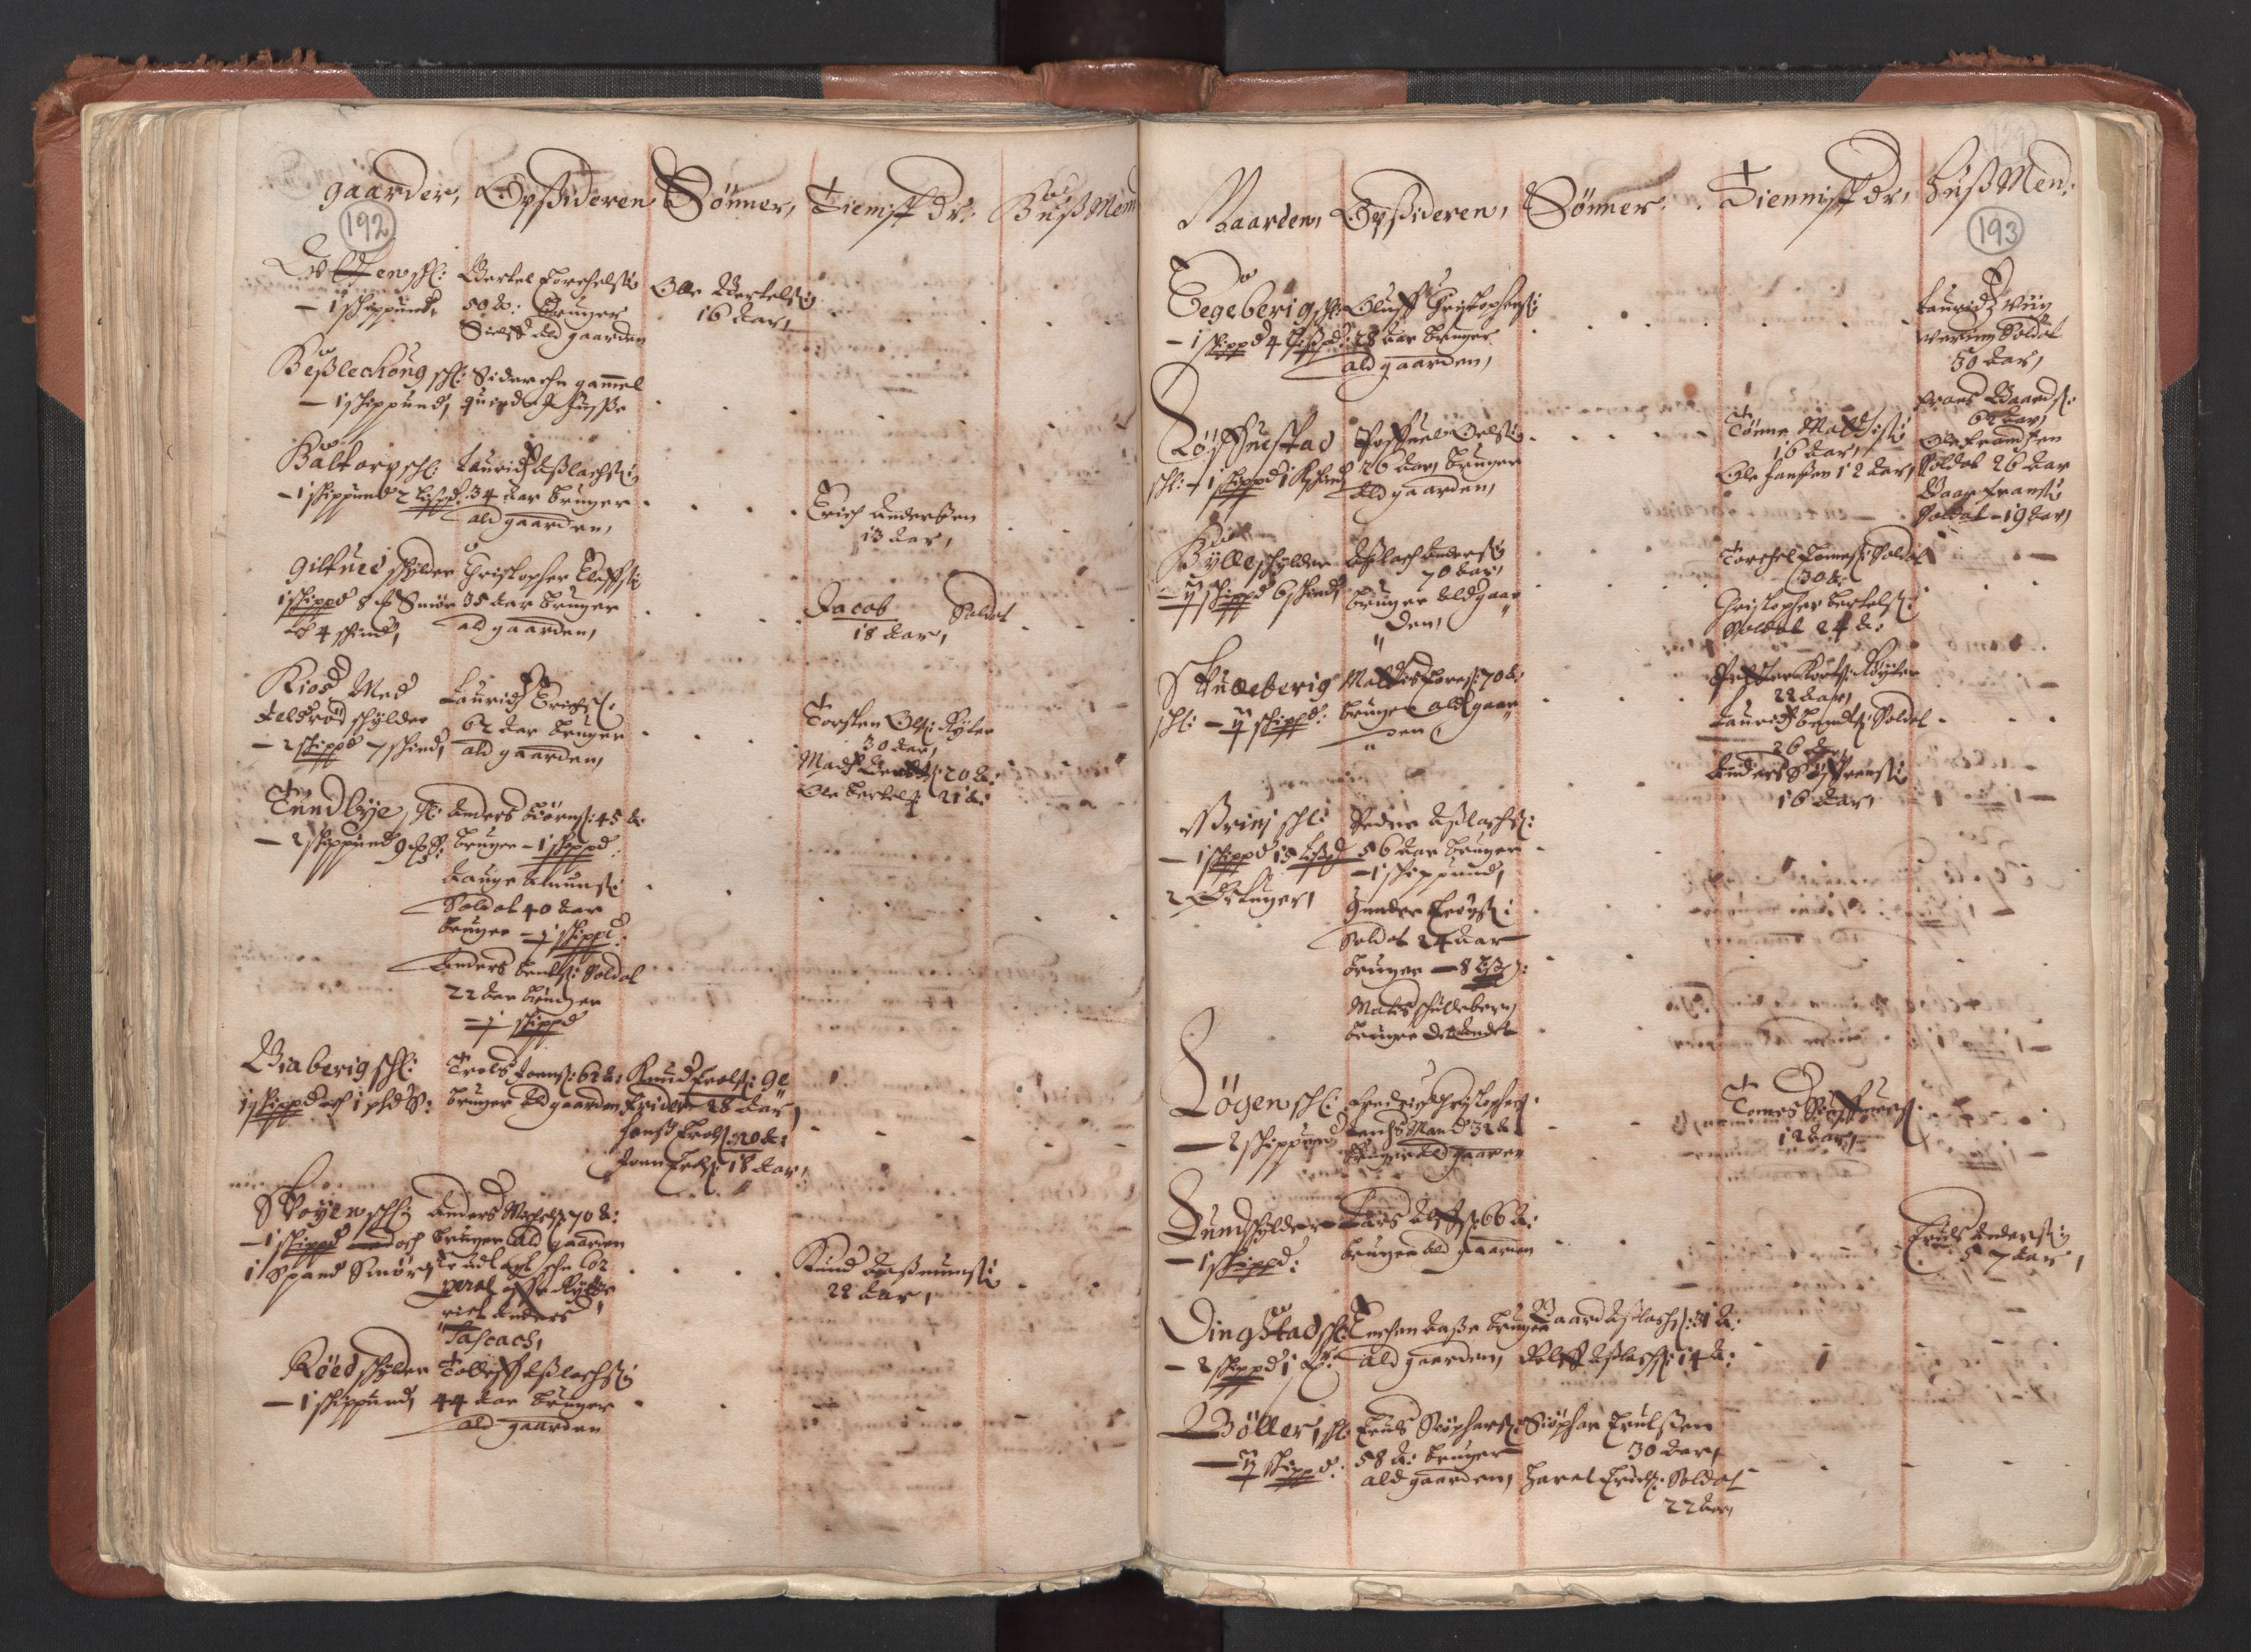 RA, Fogdenes og sorenskrivernes manntall 1664-1666, nr. 1: Fogderier (len og skipreider) i nåværende Østfold fylke, 1664, s. 192-193